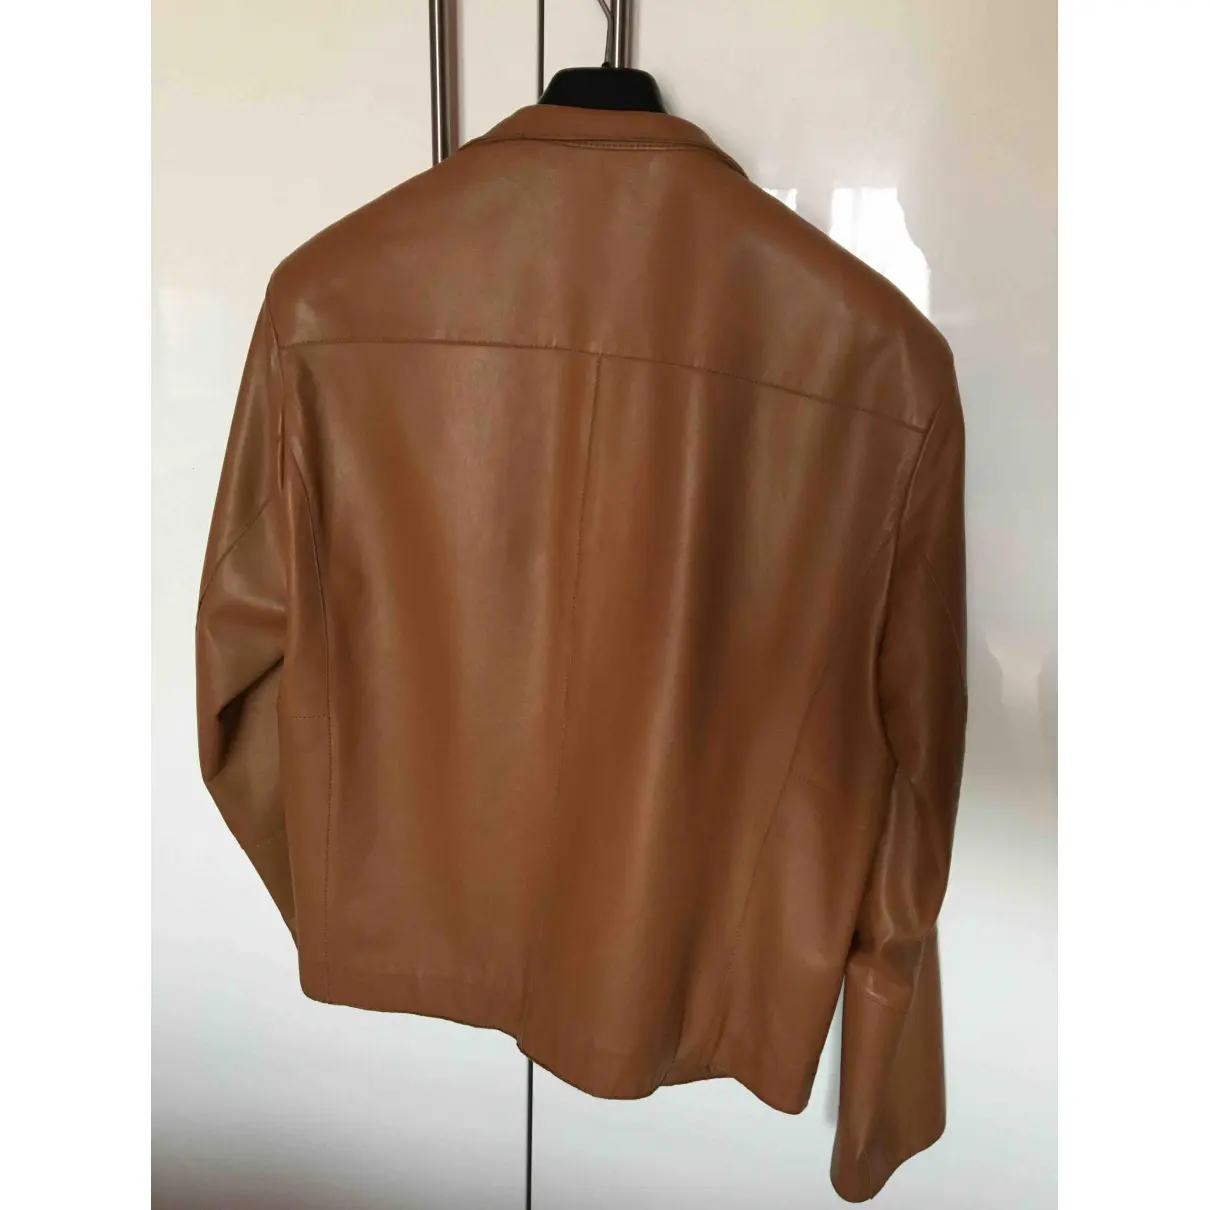 Buy Armani Collezioni Leather jacket online